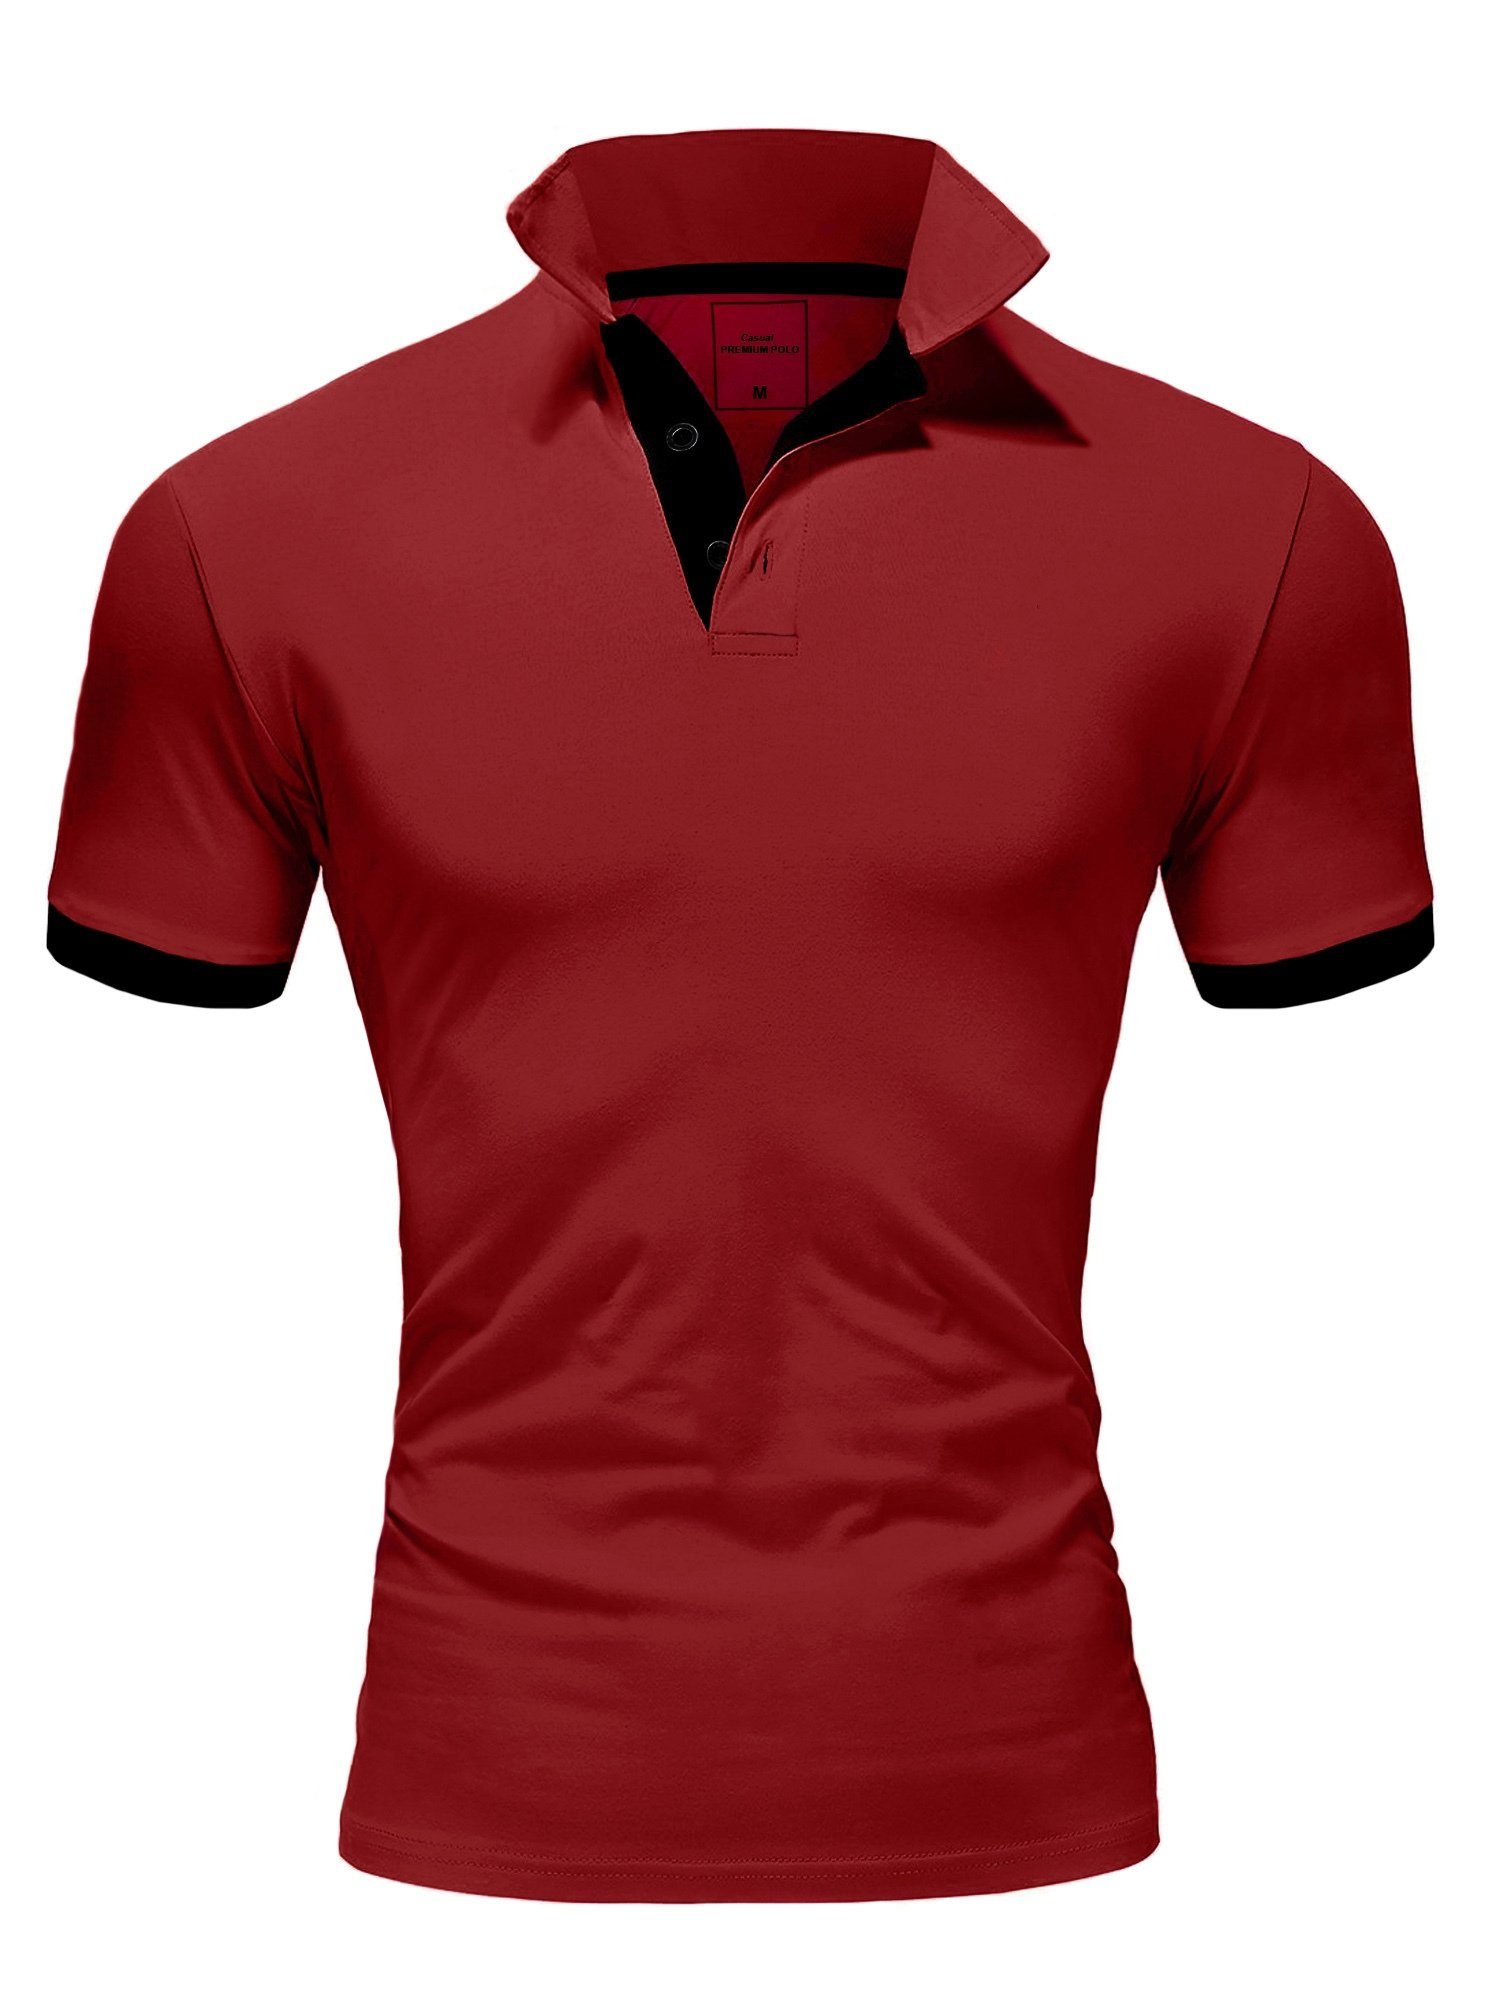 REPUBLIX Poloshirt RONALD Herren Shirt mit kontrastierenden Akzenten, in Piqué Qualität Bordeaux/Schwarz